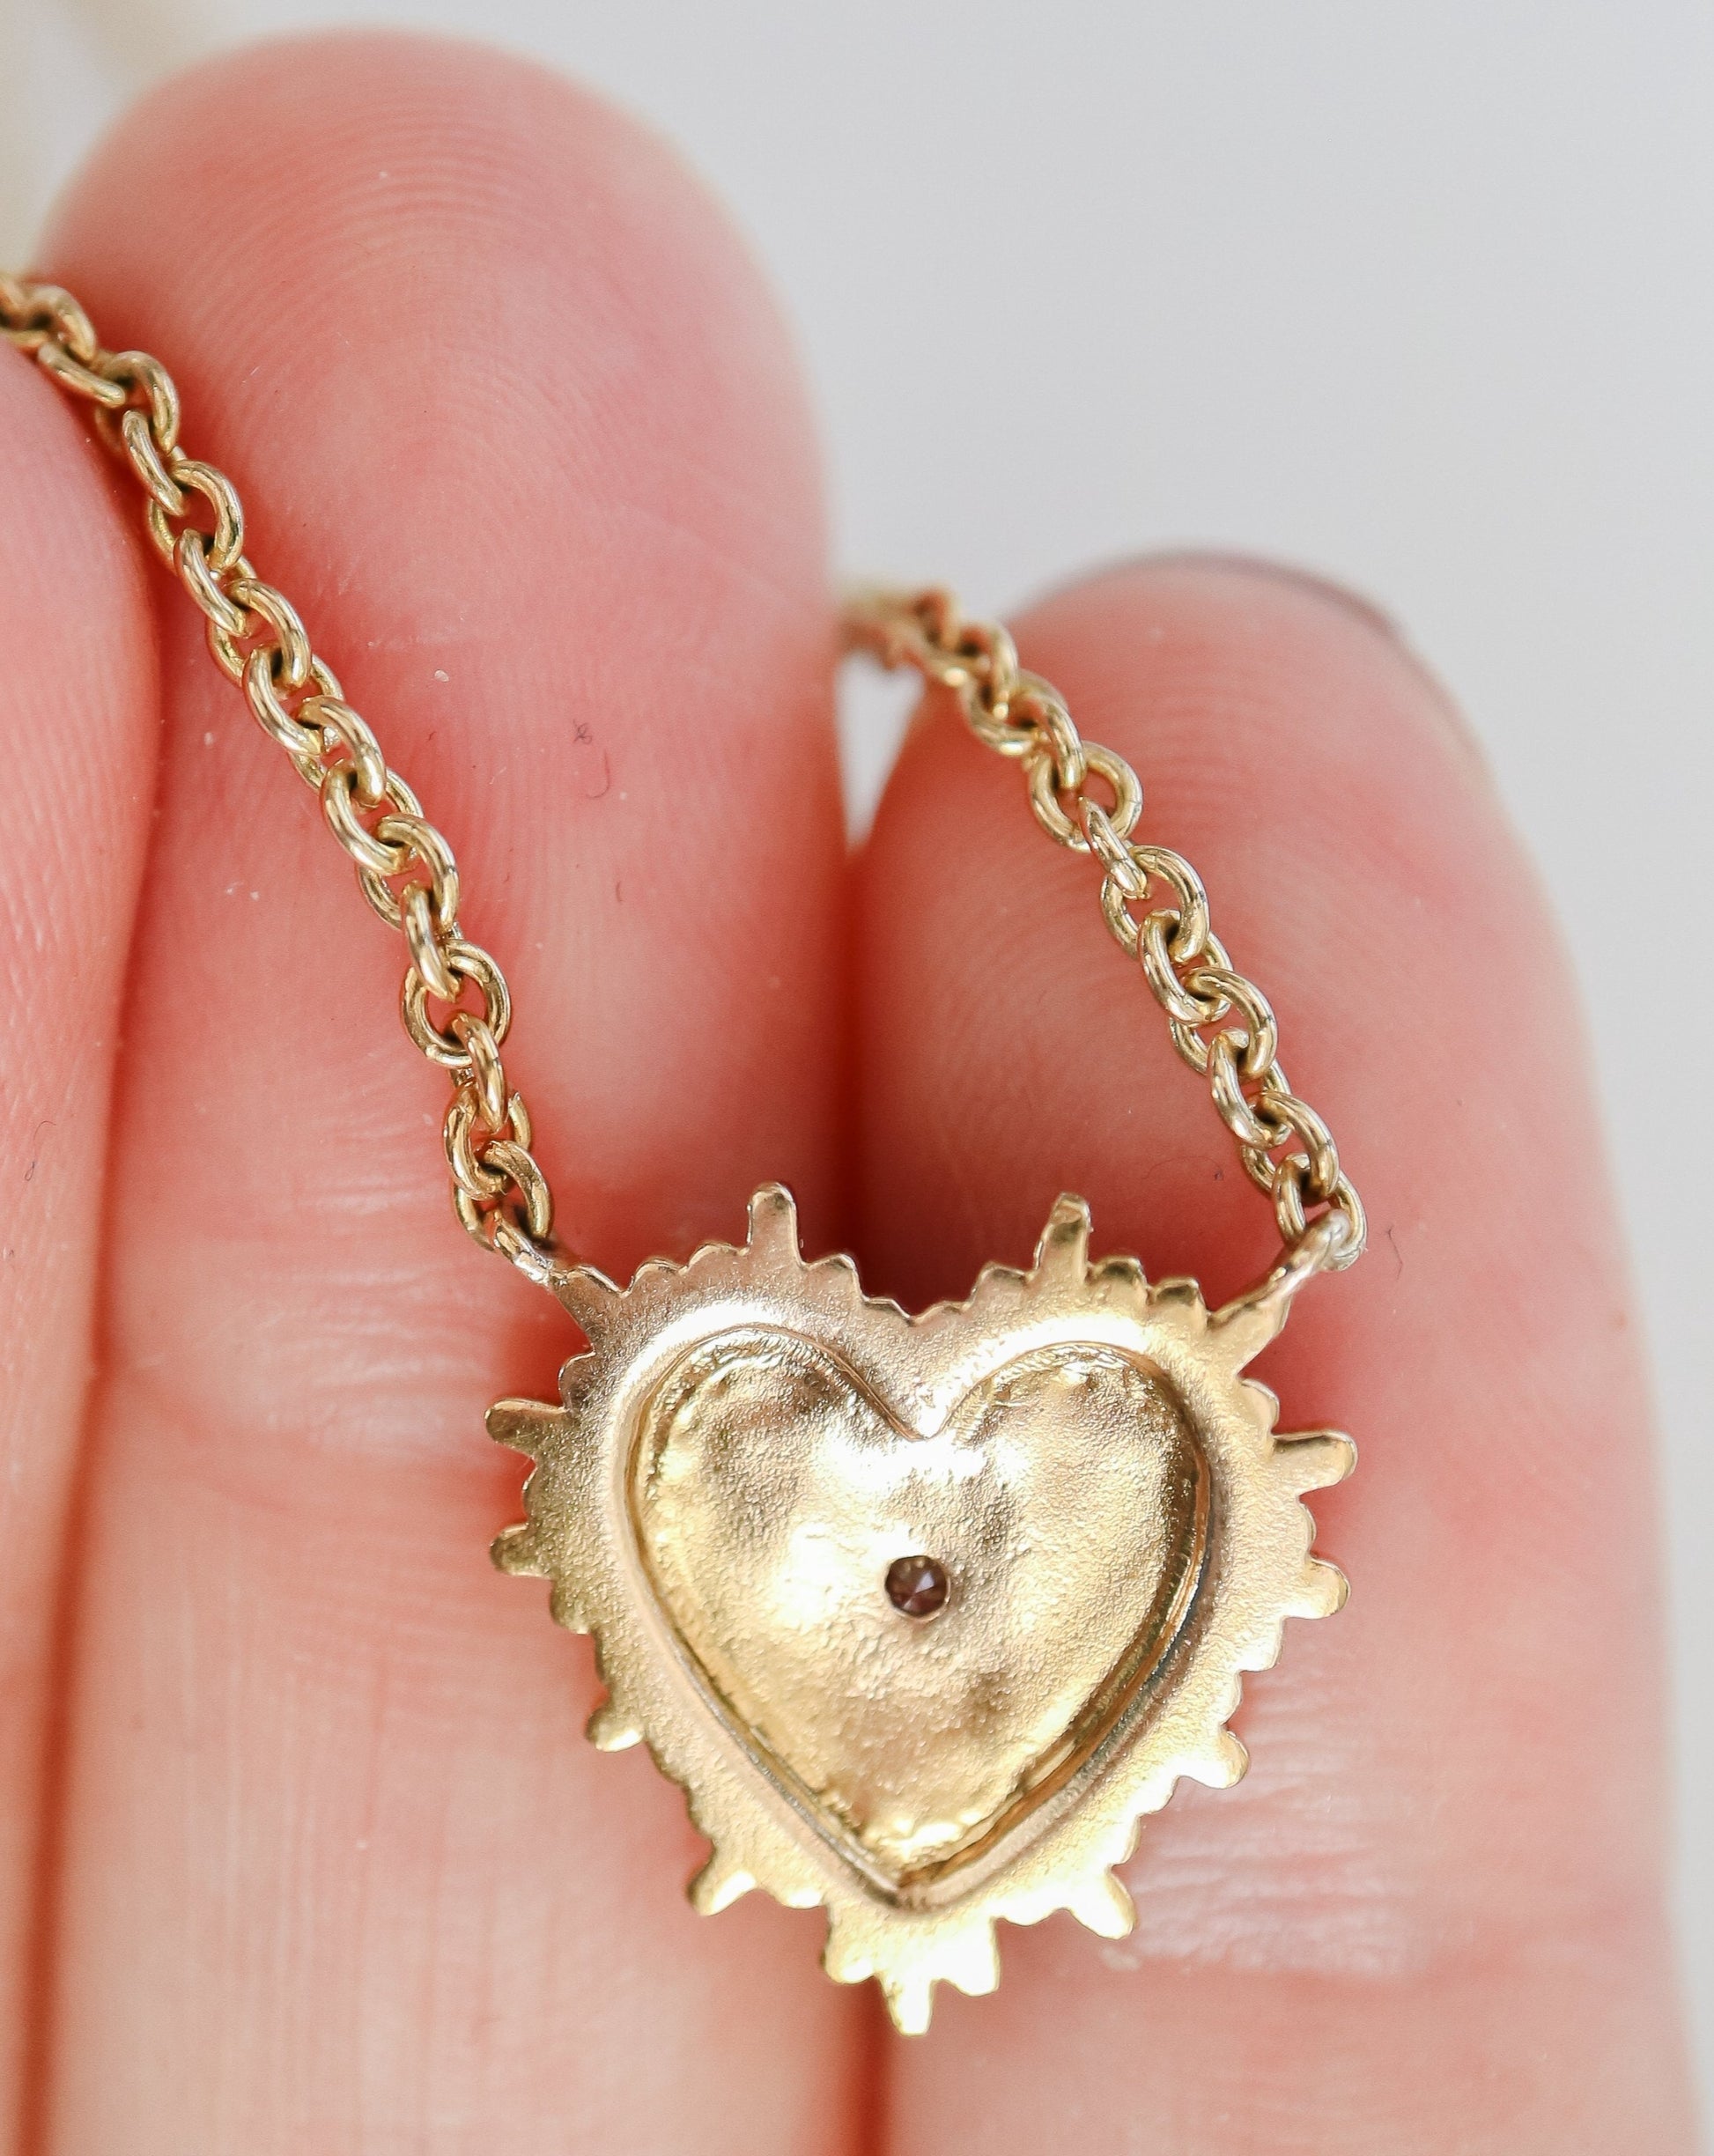 9kt gold and diamond heart art deco pendant